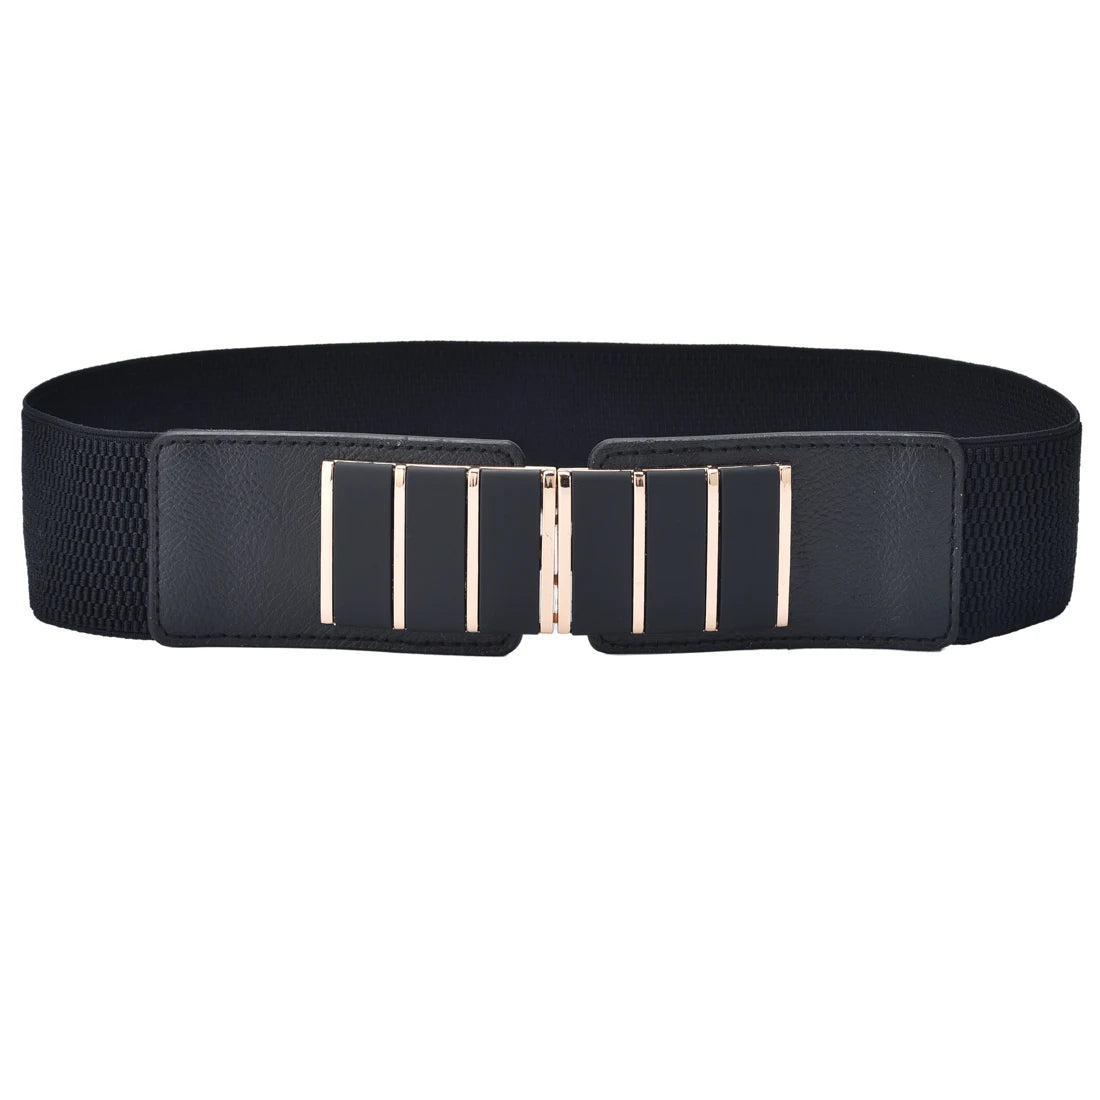 Women's Elastic Wide Waist Belt | Stretchy Classic Cinch Belts | Fashion Waistband for Dresses